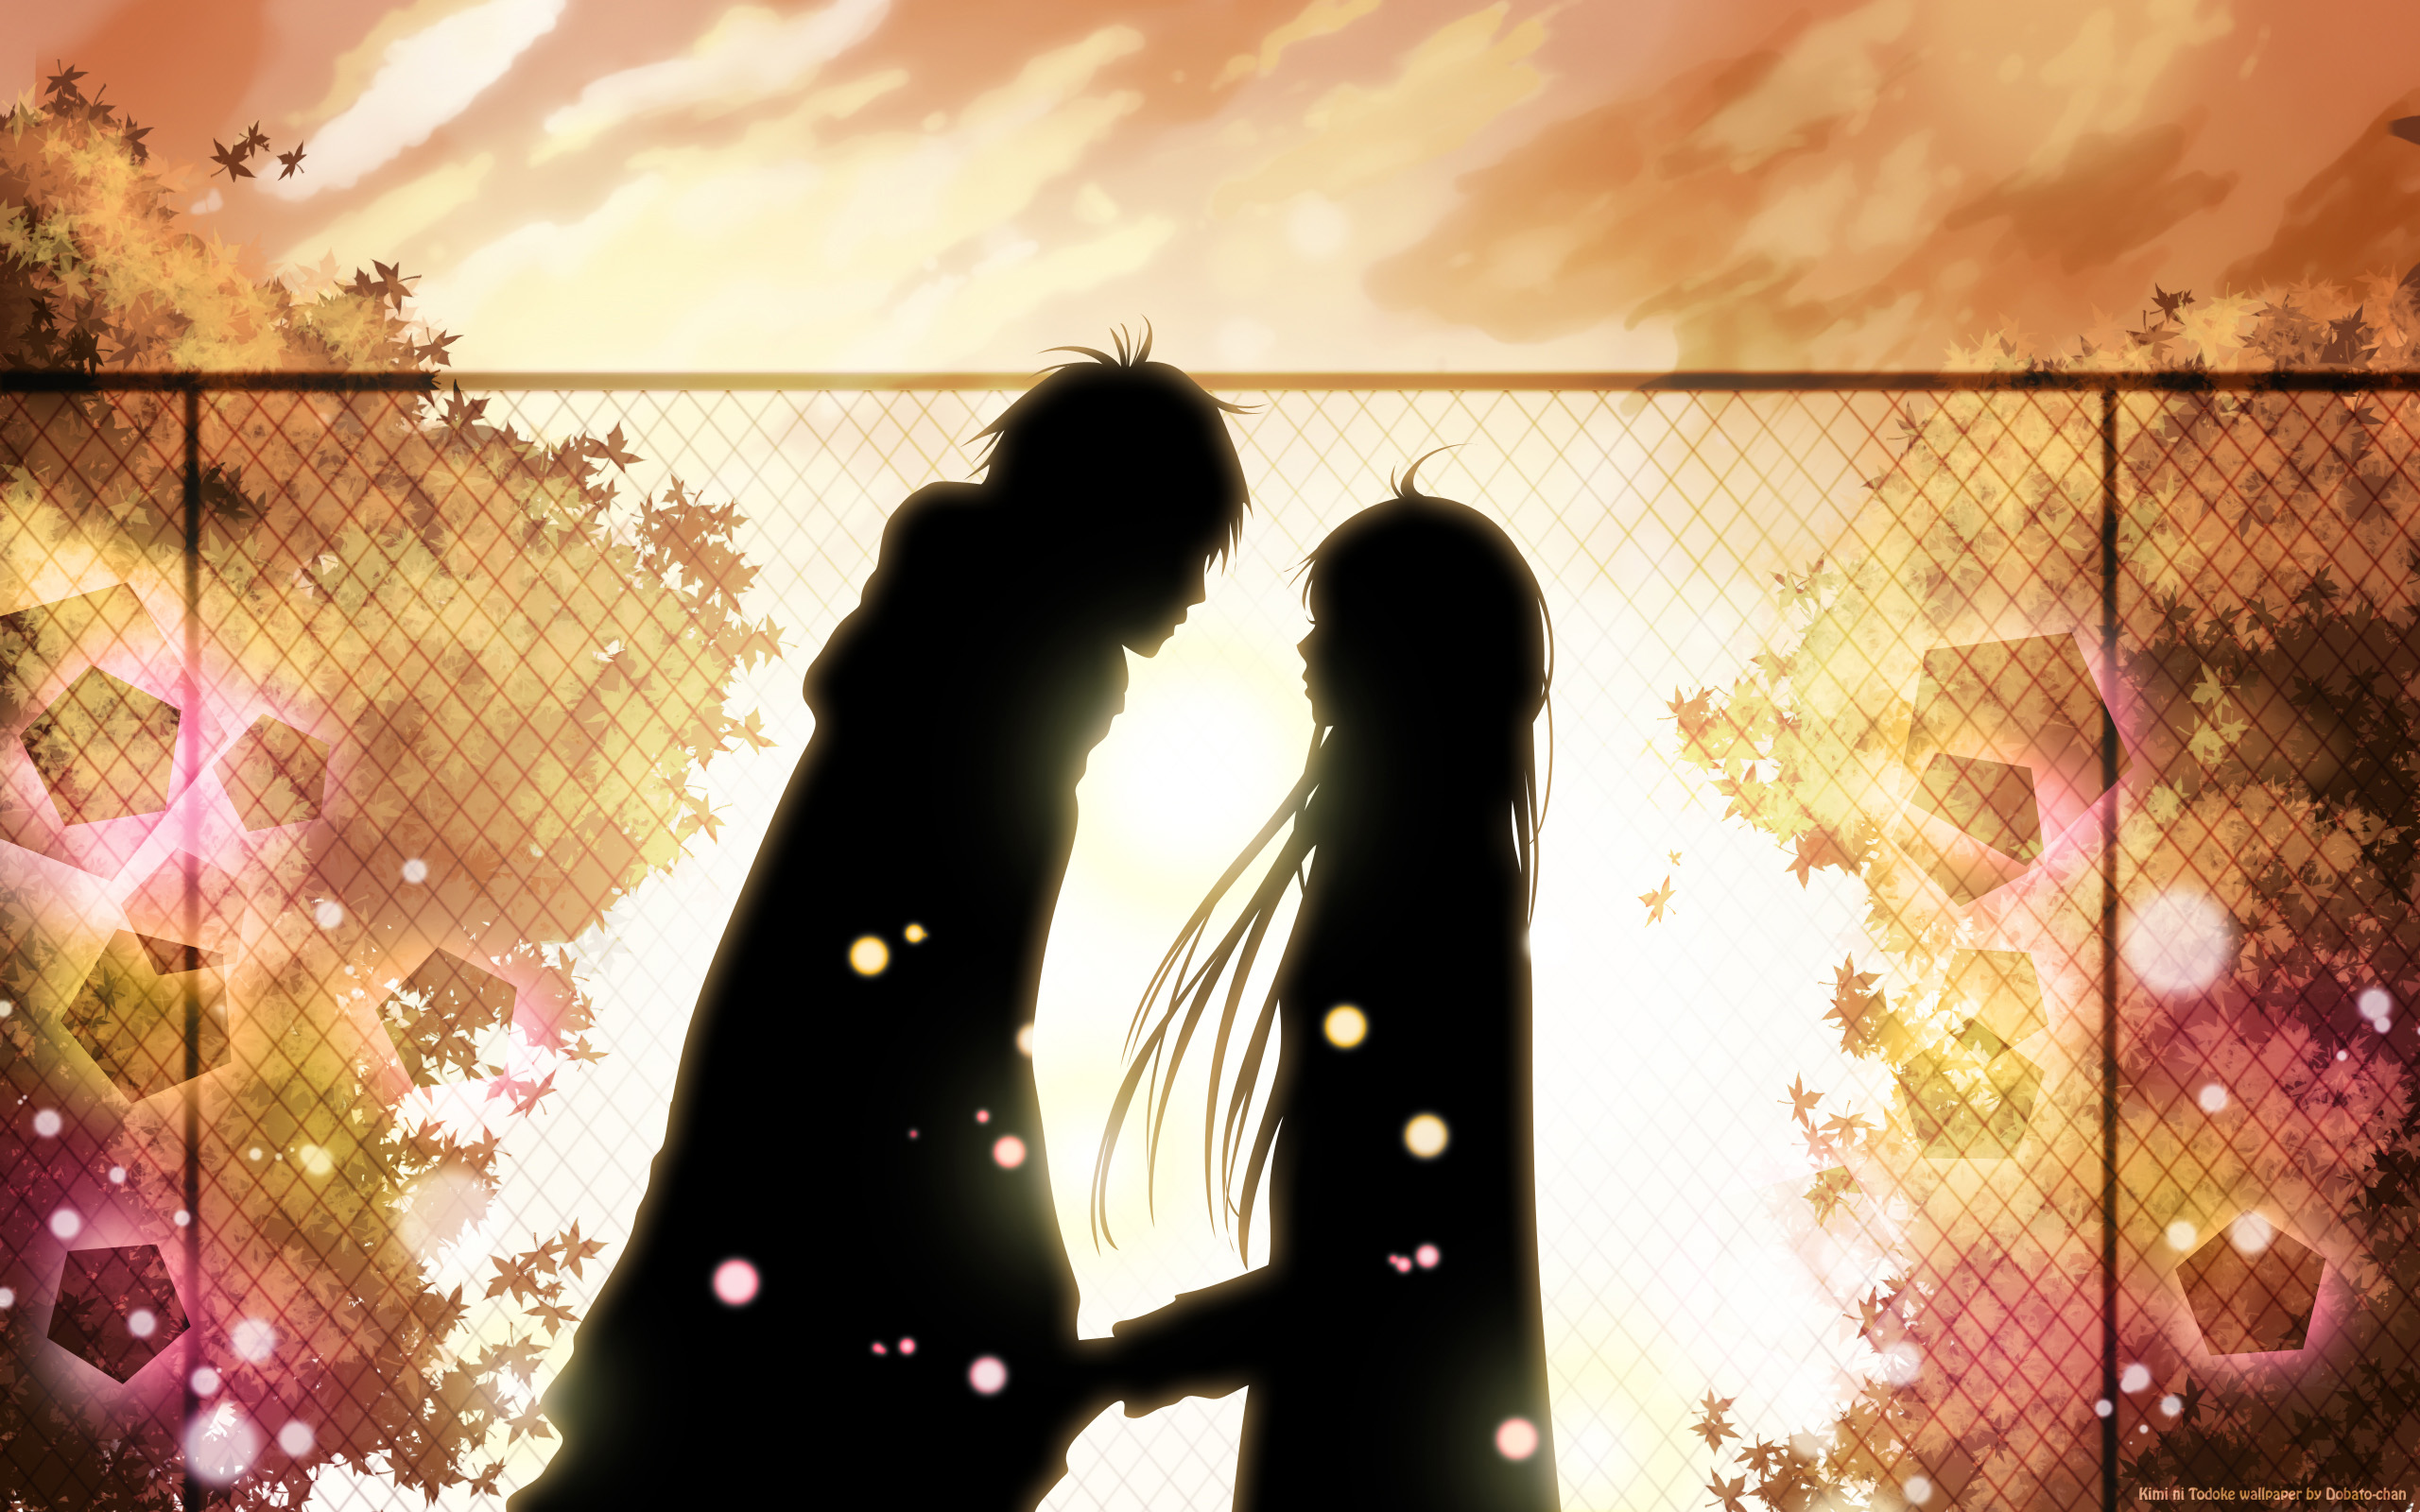 Romantic Anime Scene Wallpaper Wide Desktop 0cnw1thc Yoanu